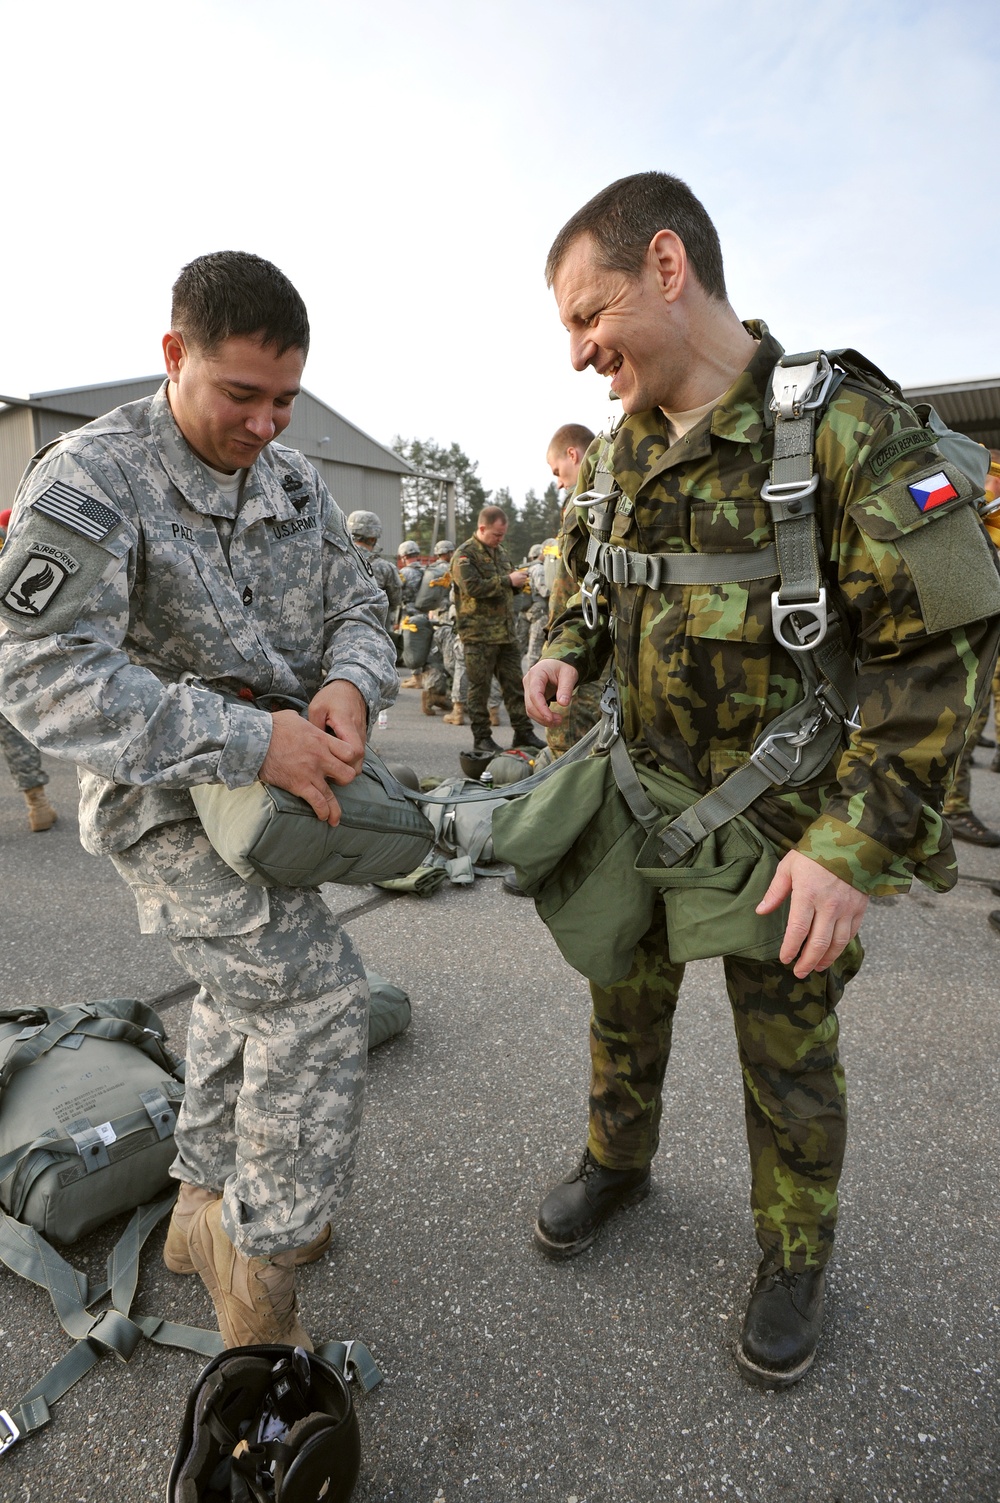 173rd Airborne Brigade NATO Partnered Airborne operations